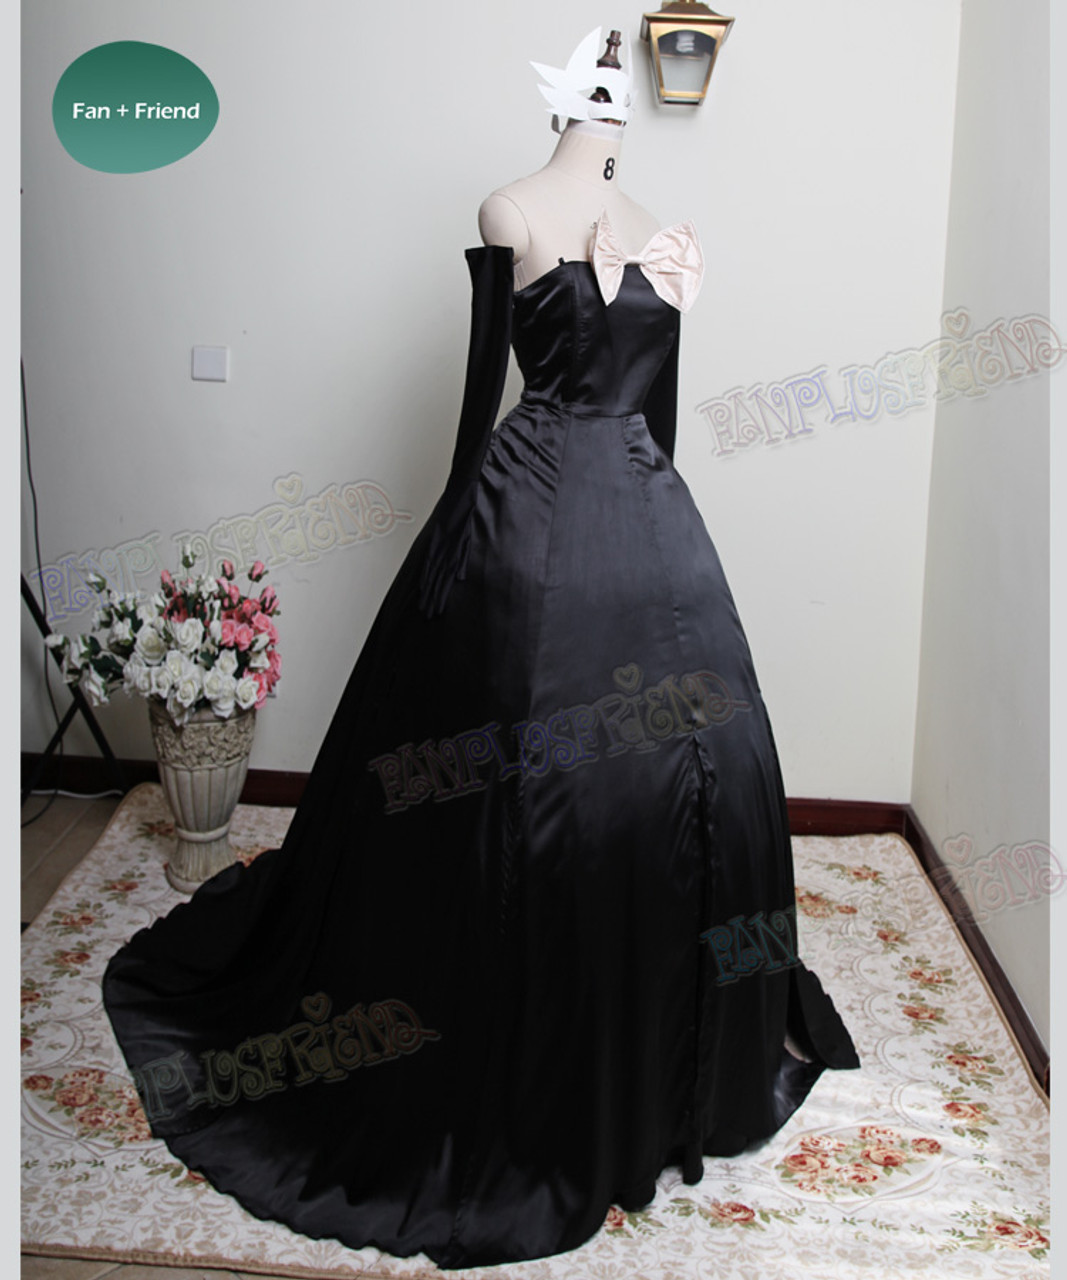 Shiny Gardevoir, with black dress - Grid Paint